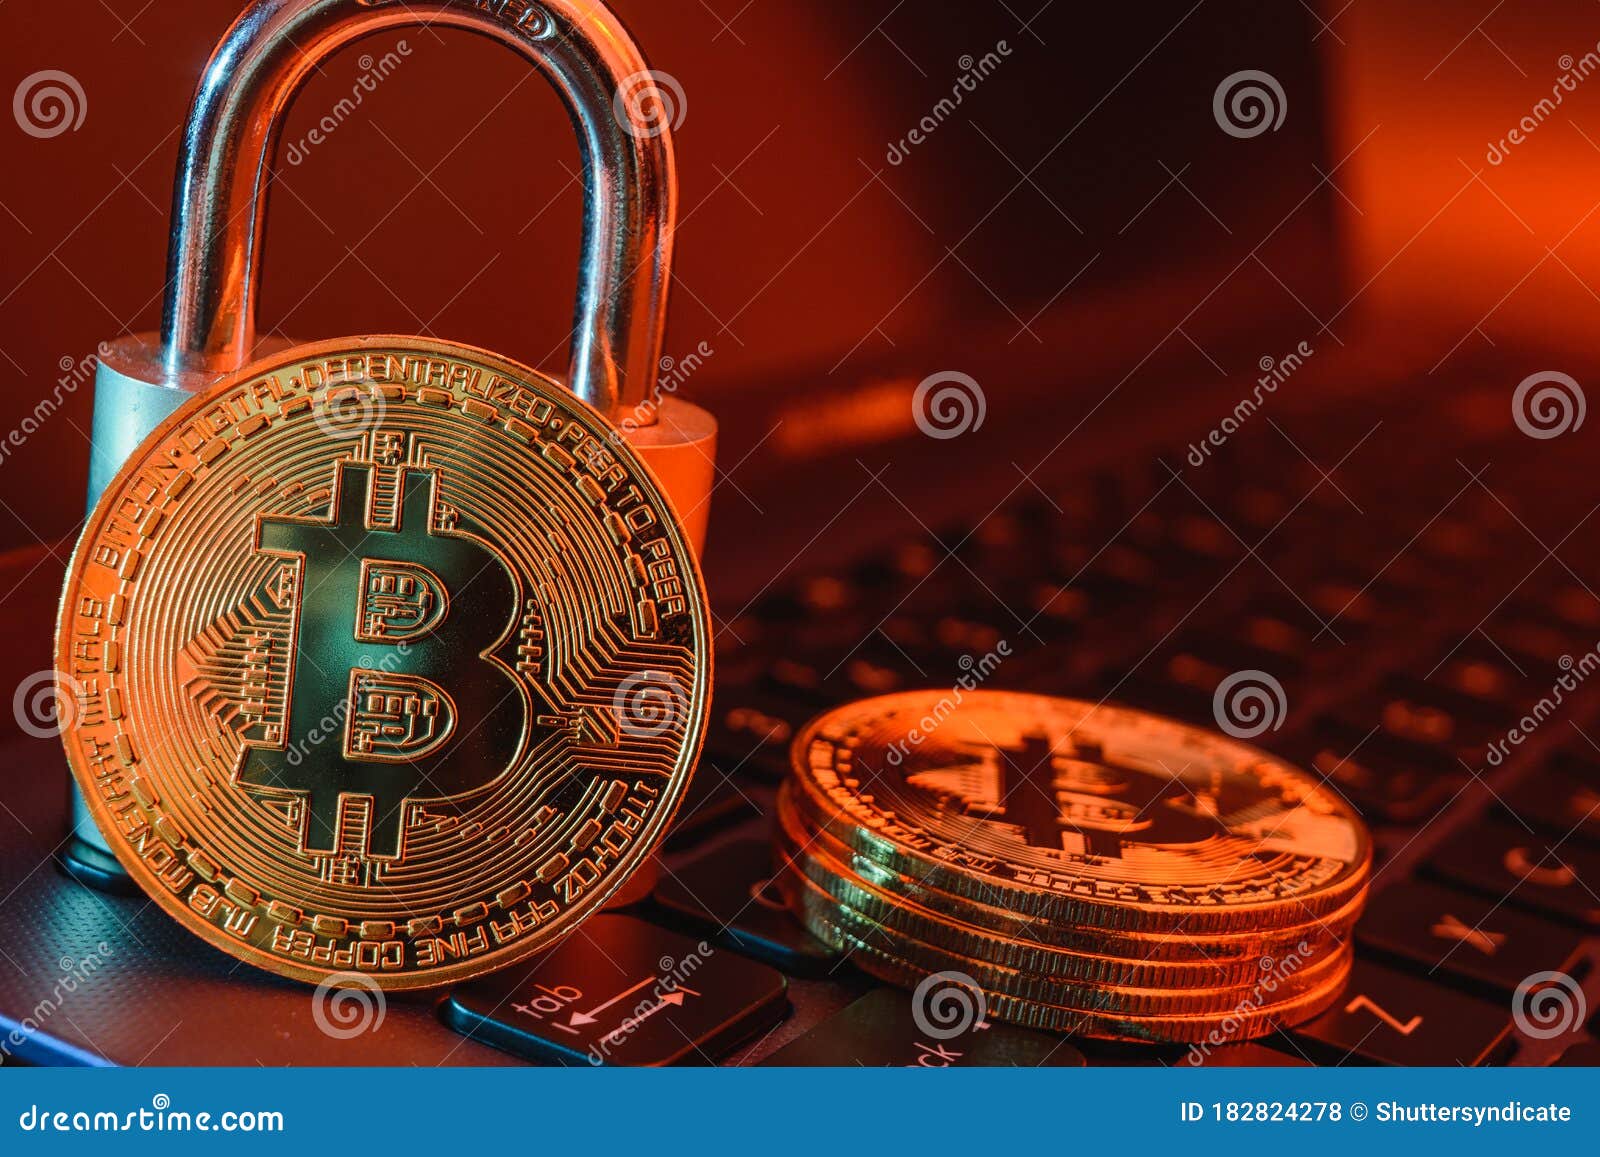 Bitcoin безопасность ltc online classes